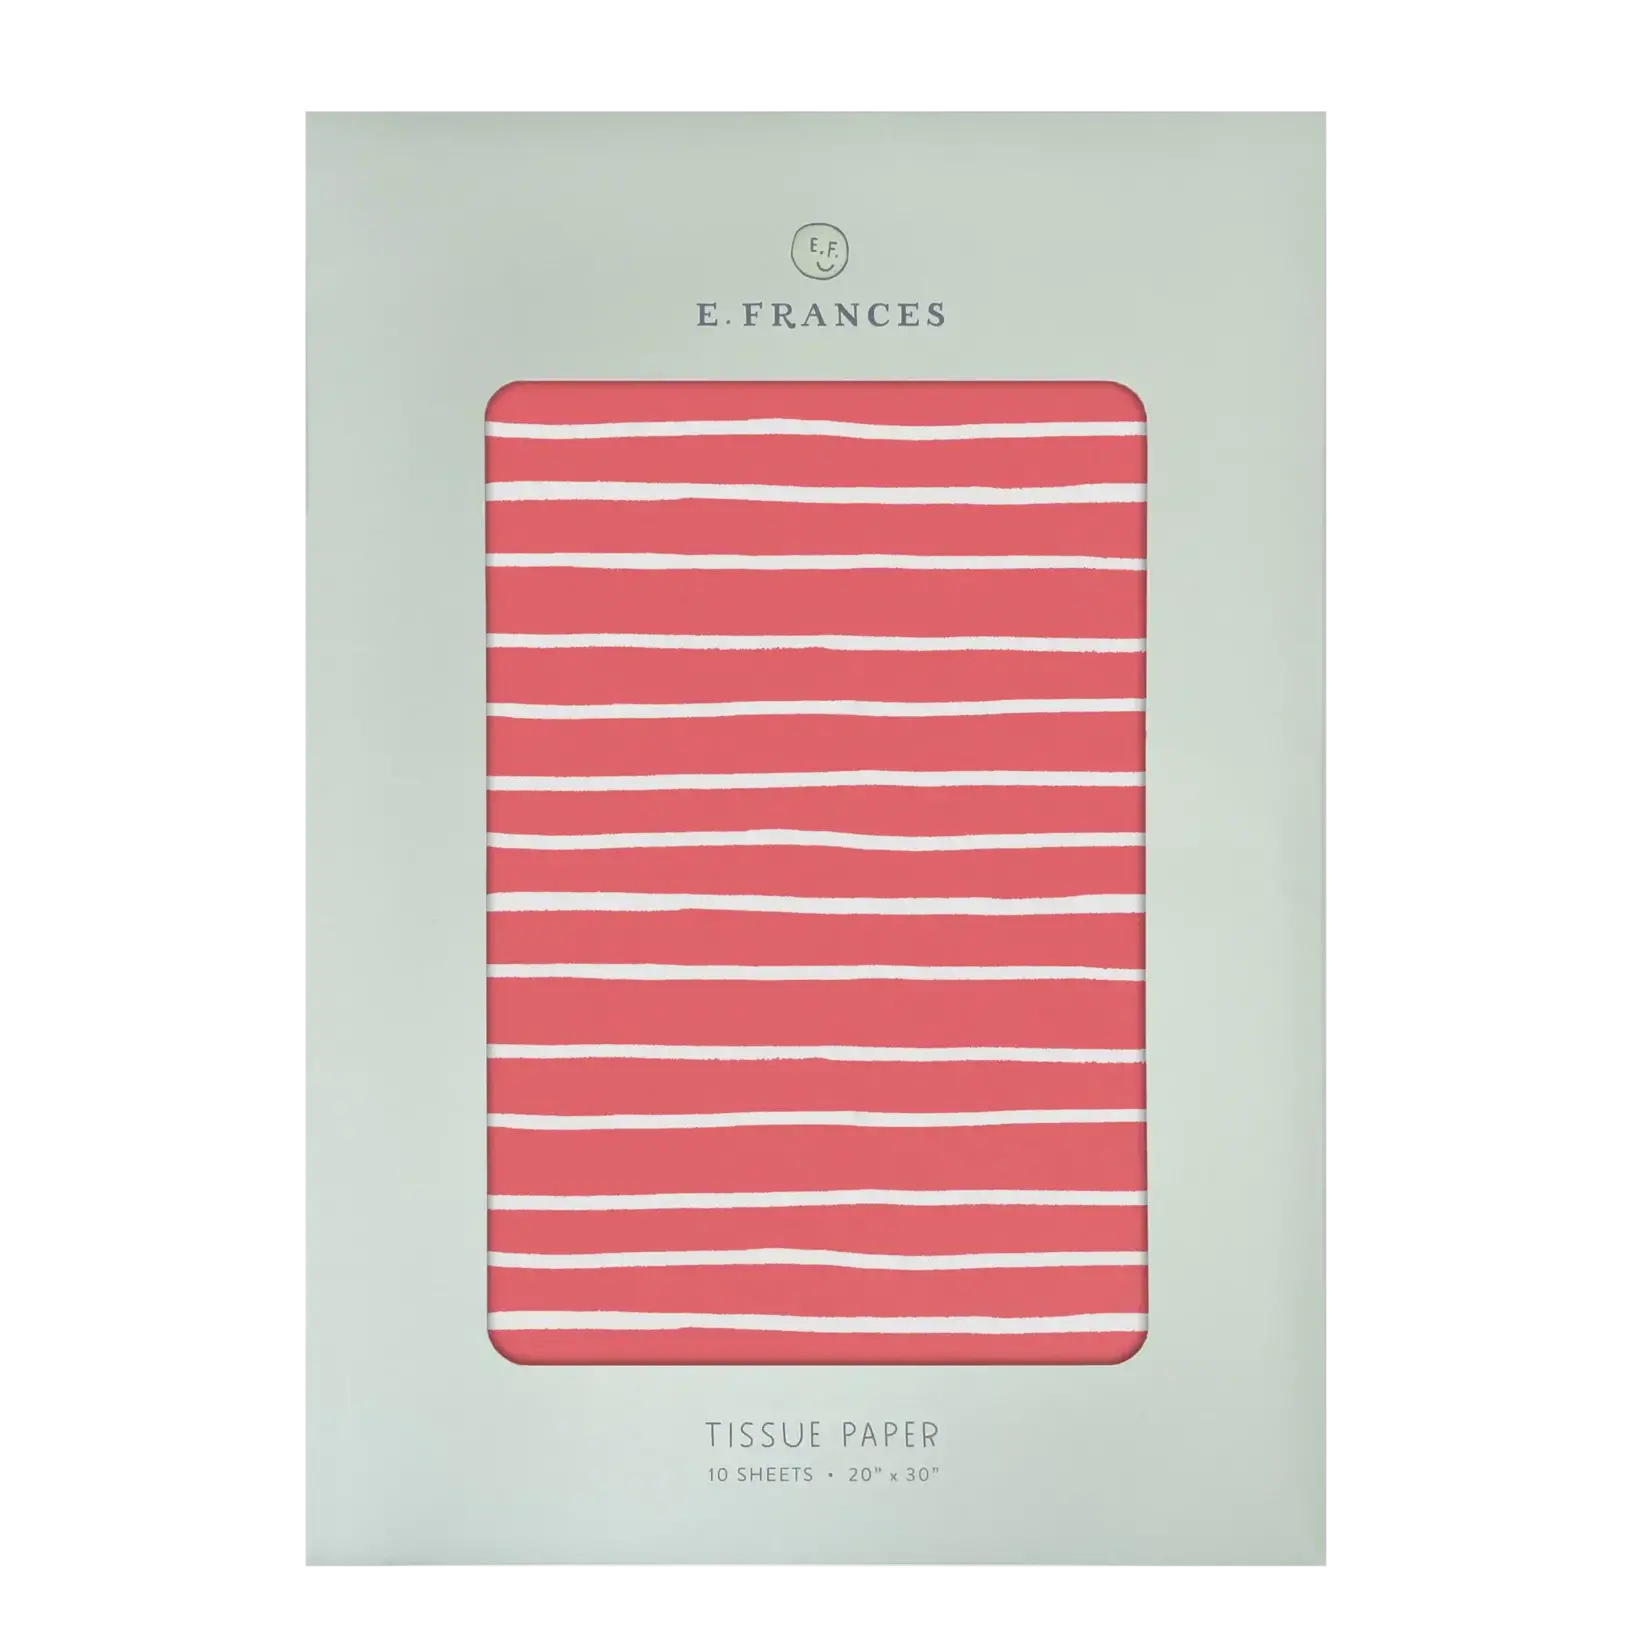 E. Frances Red Stripe Tissue Paper